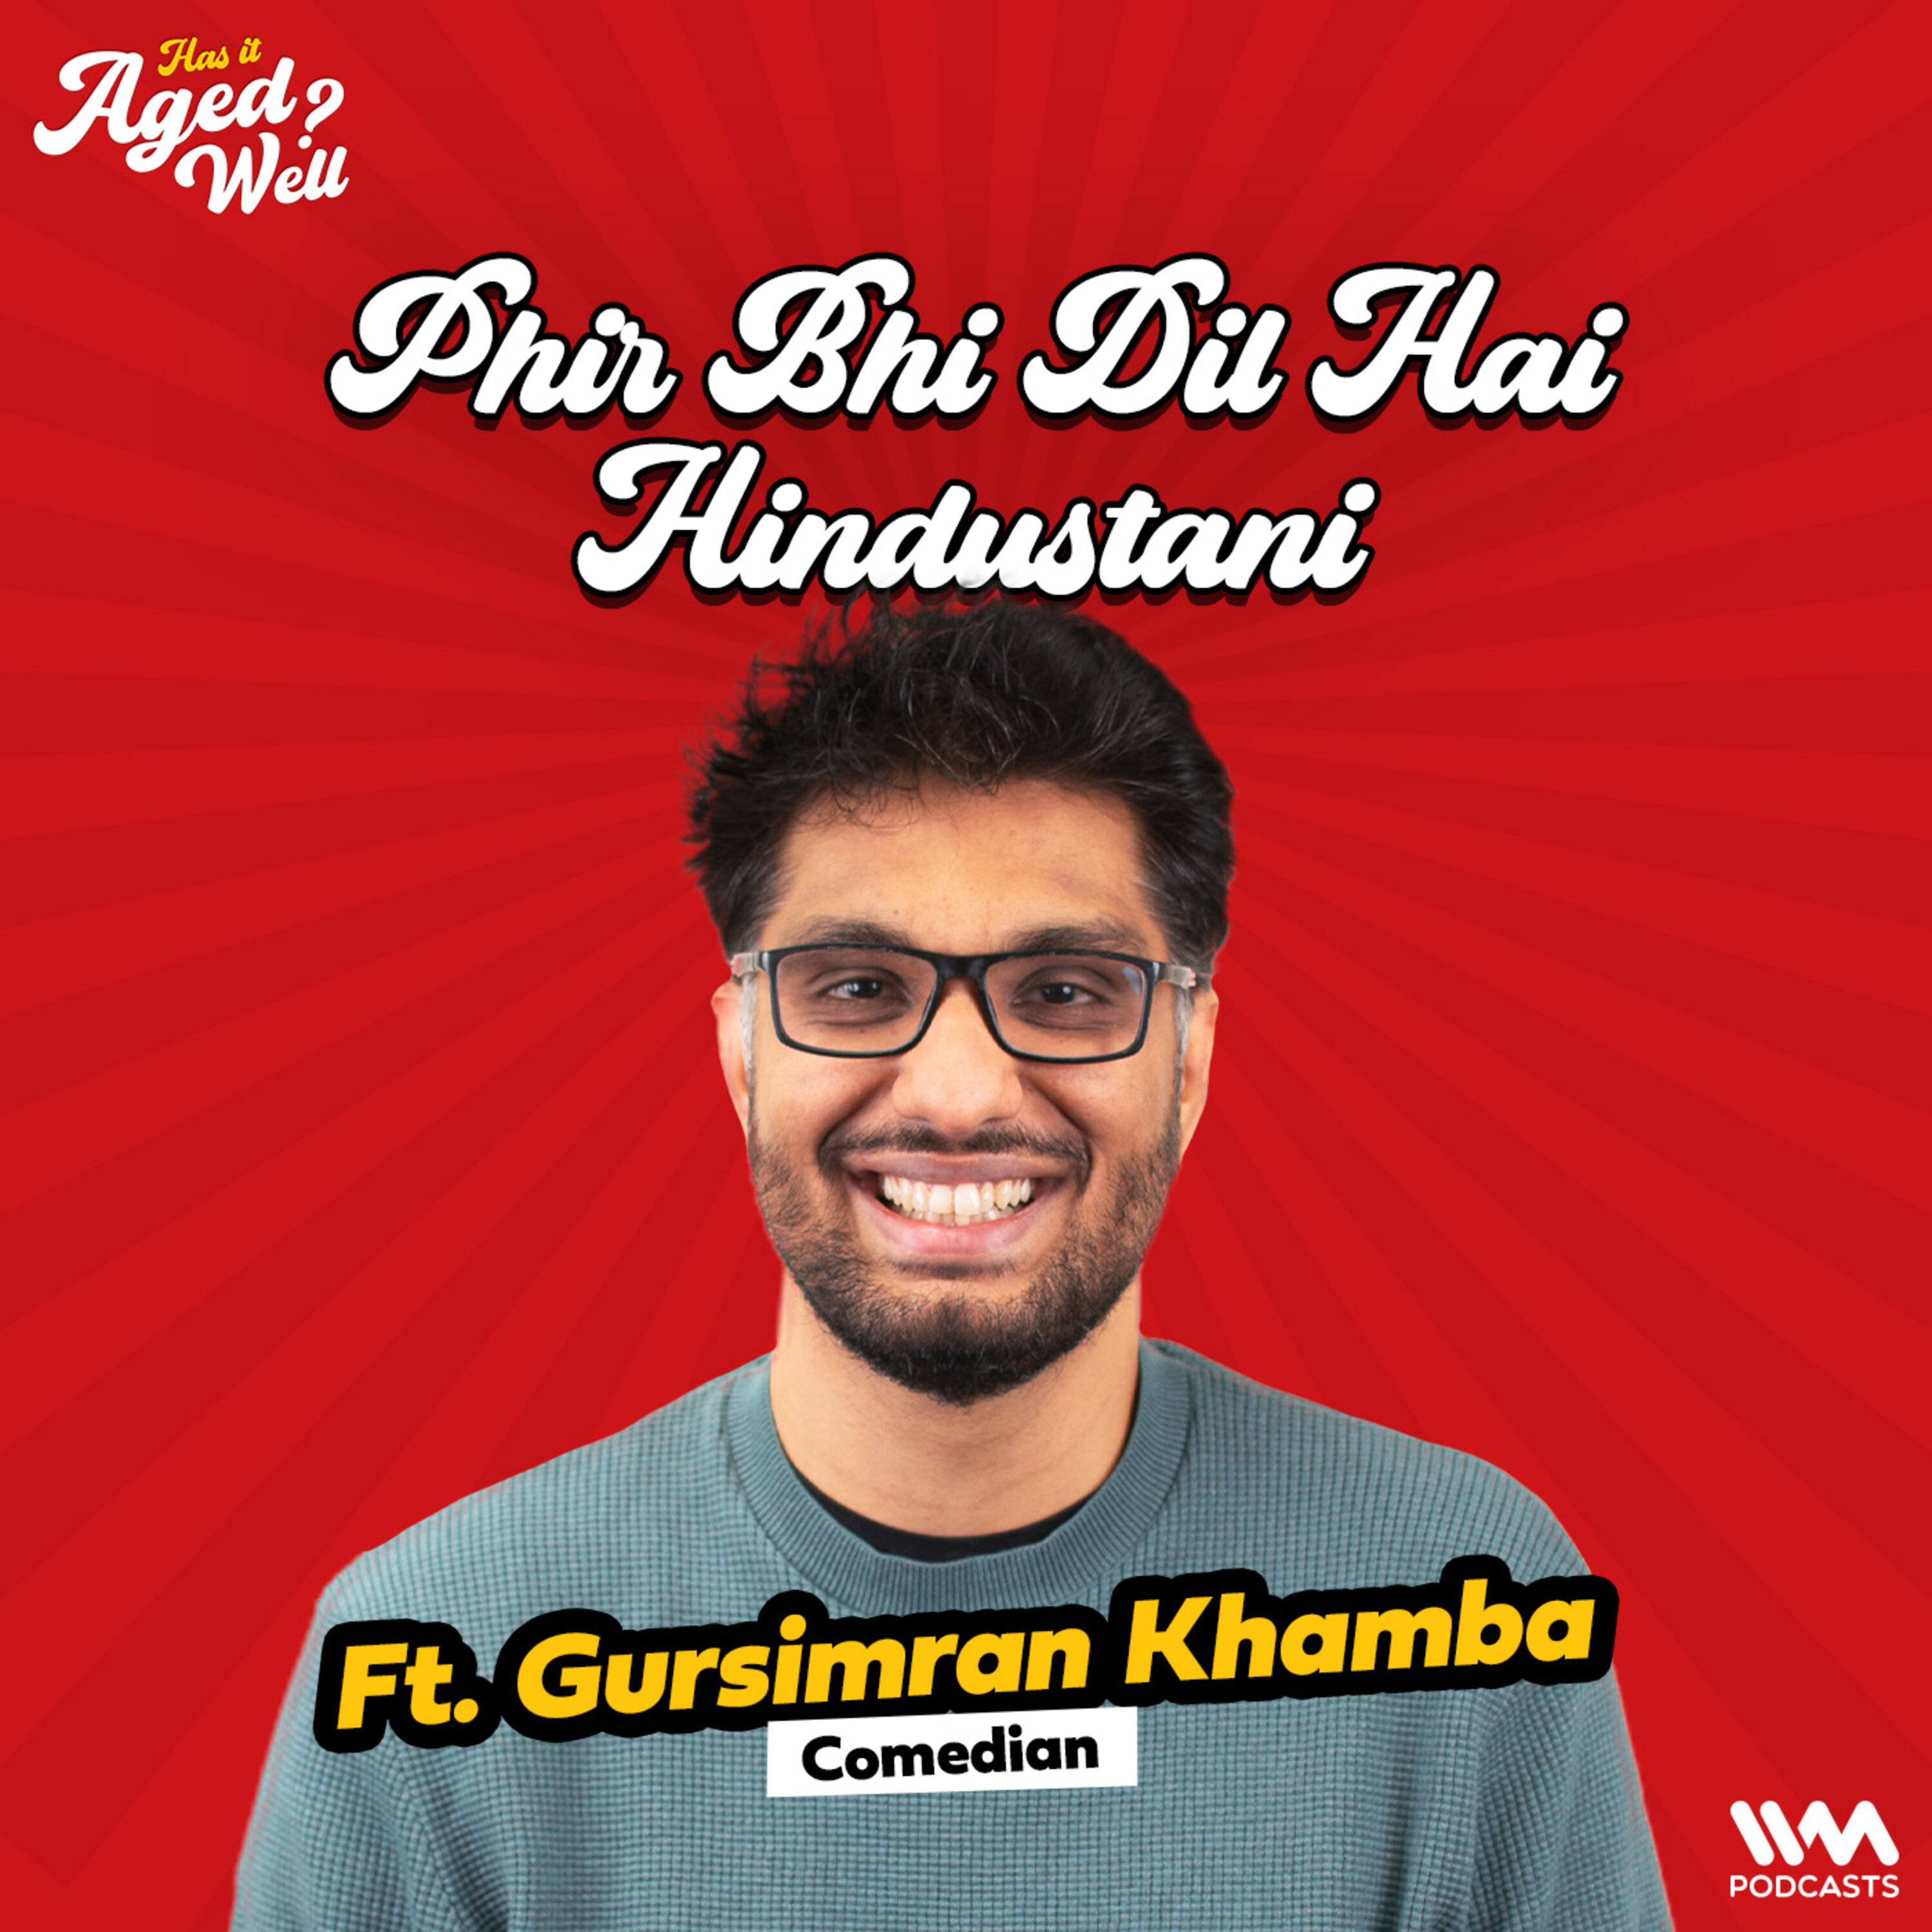 Phir Bhi Dil Hai Hindustani ft. Gursimran Khamba | Has It Aged Well?